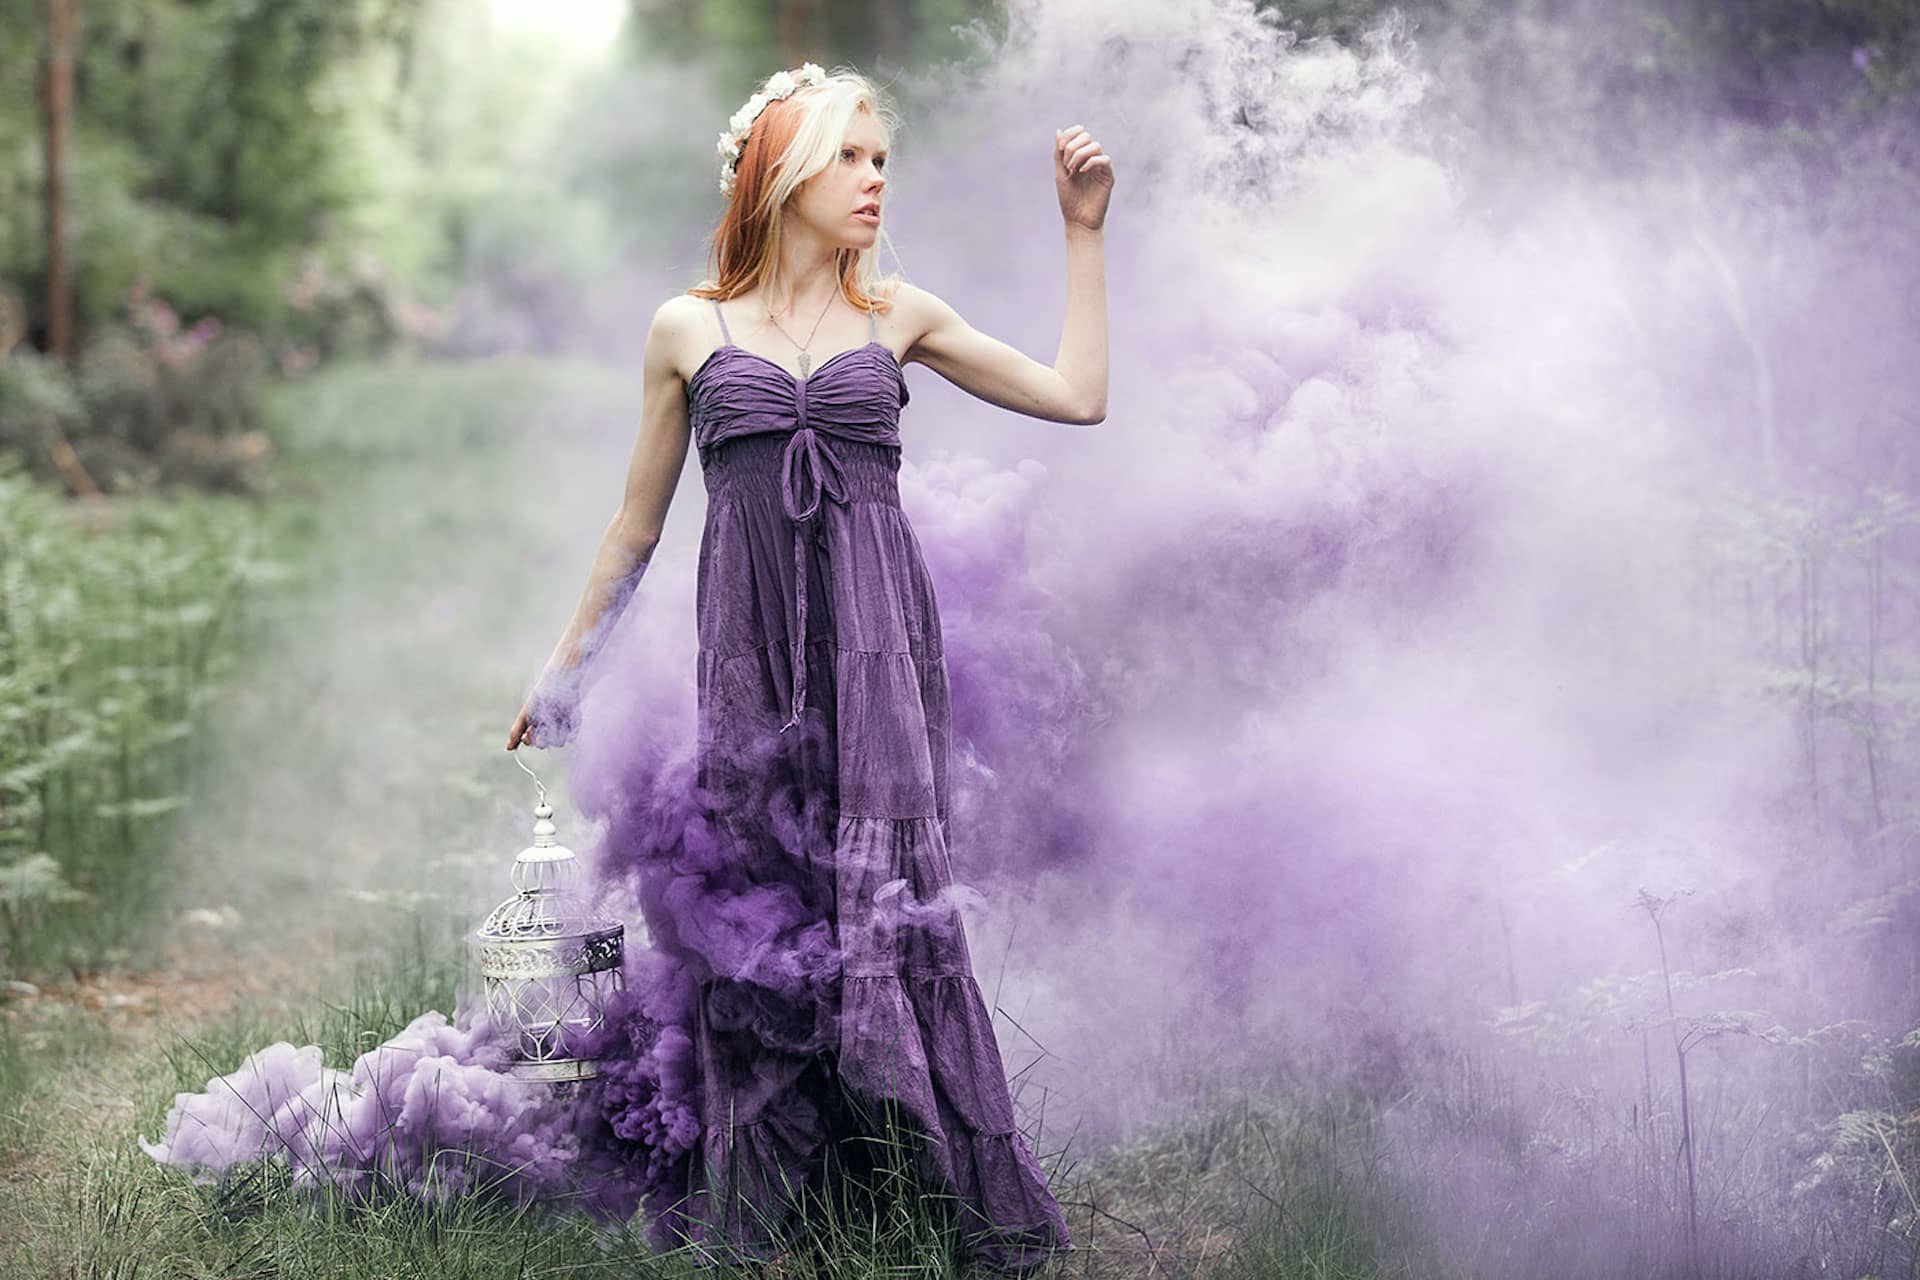 Color Smoke Bomb Photography Ideas - Portrait